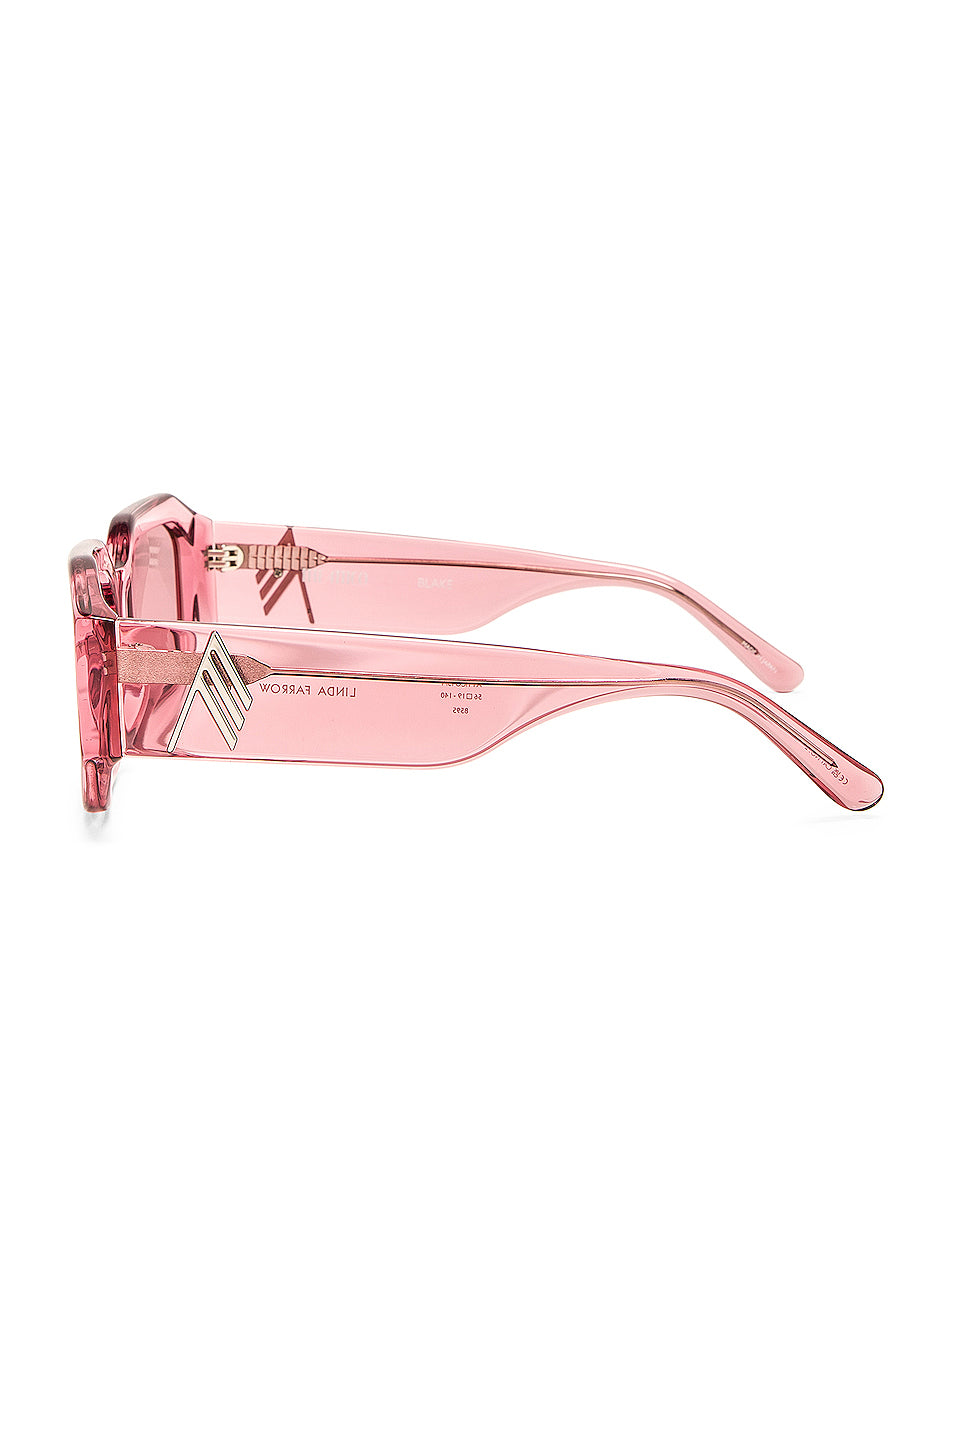 Blake Sunglasses In Pink